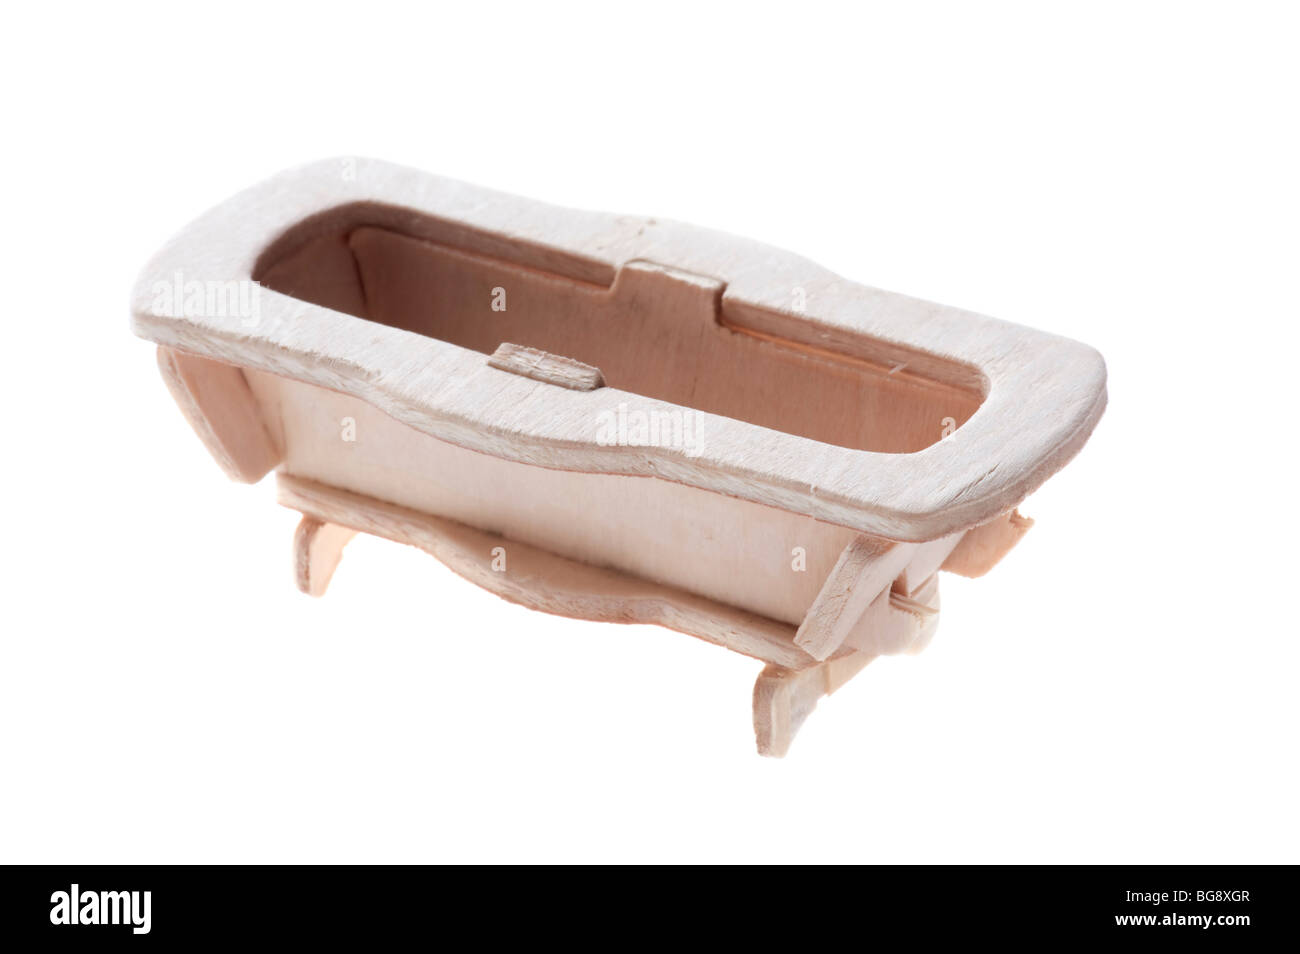 object on white Miniature wood bath toy macro Stock Photo